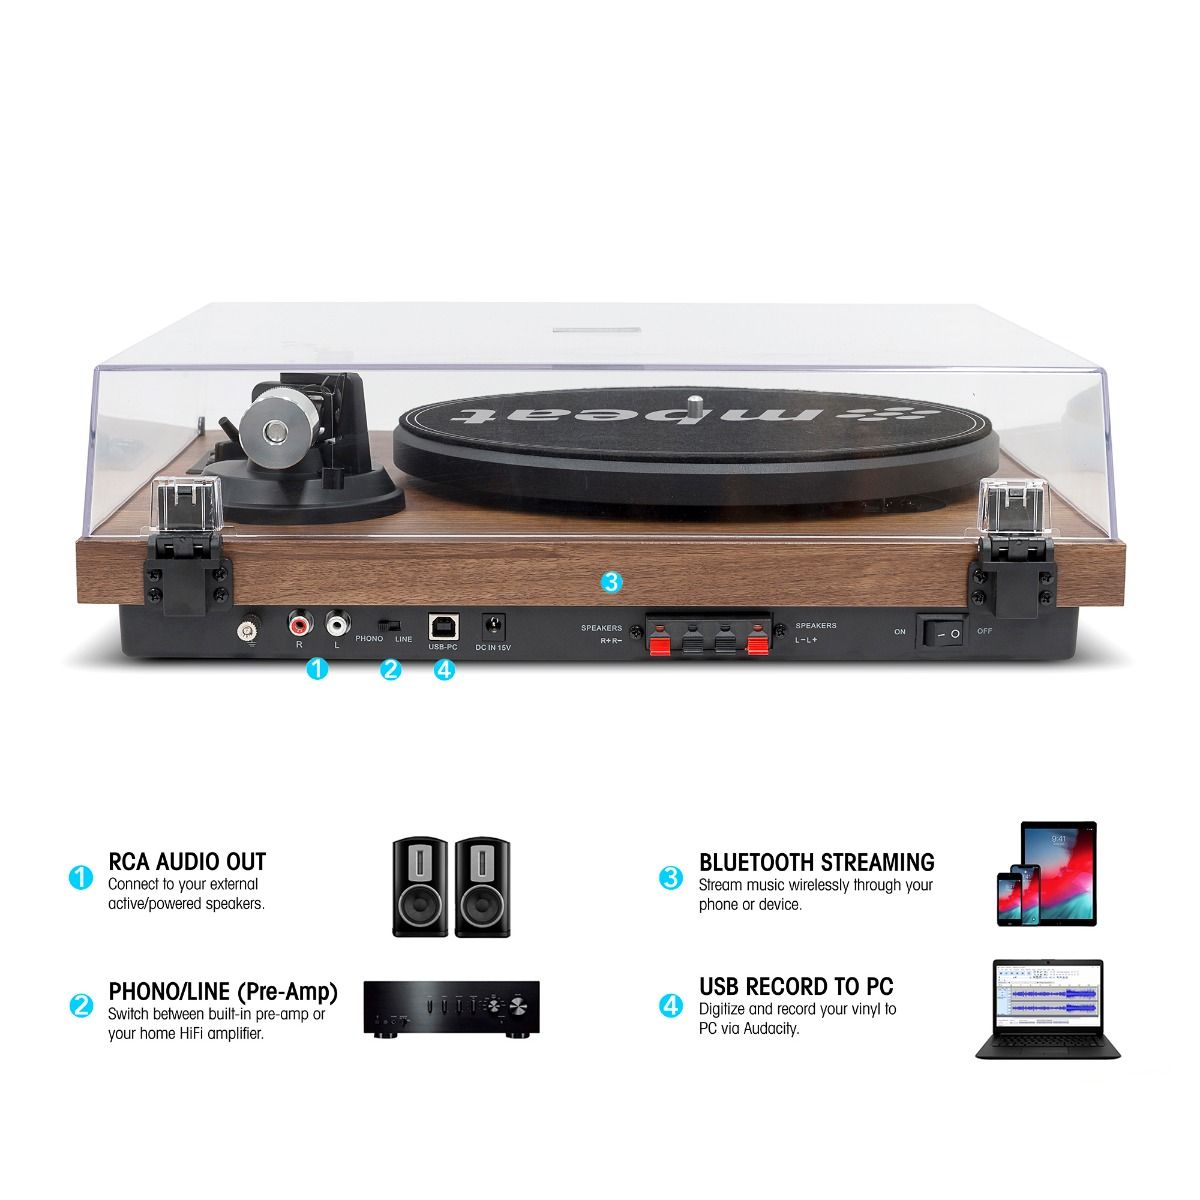 mbeat Hi-Fi Turntable with Bookshelf Speakers and Bluetooth Streaming